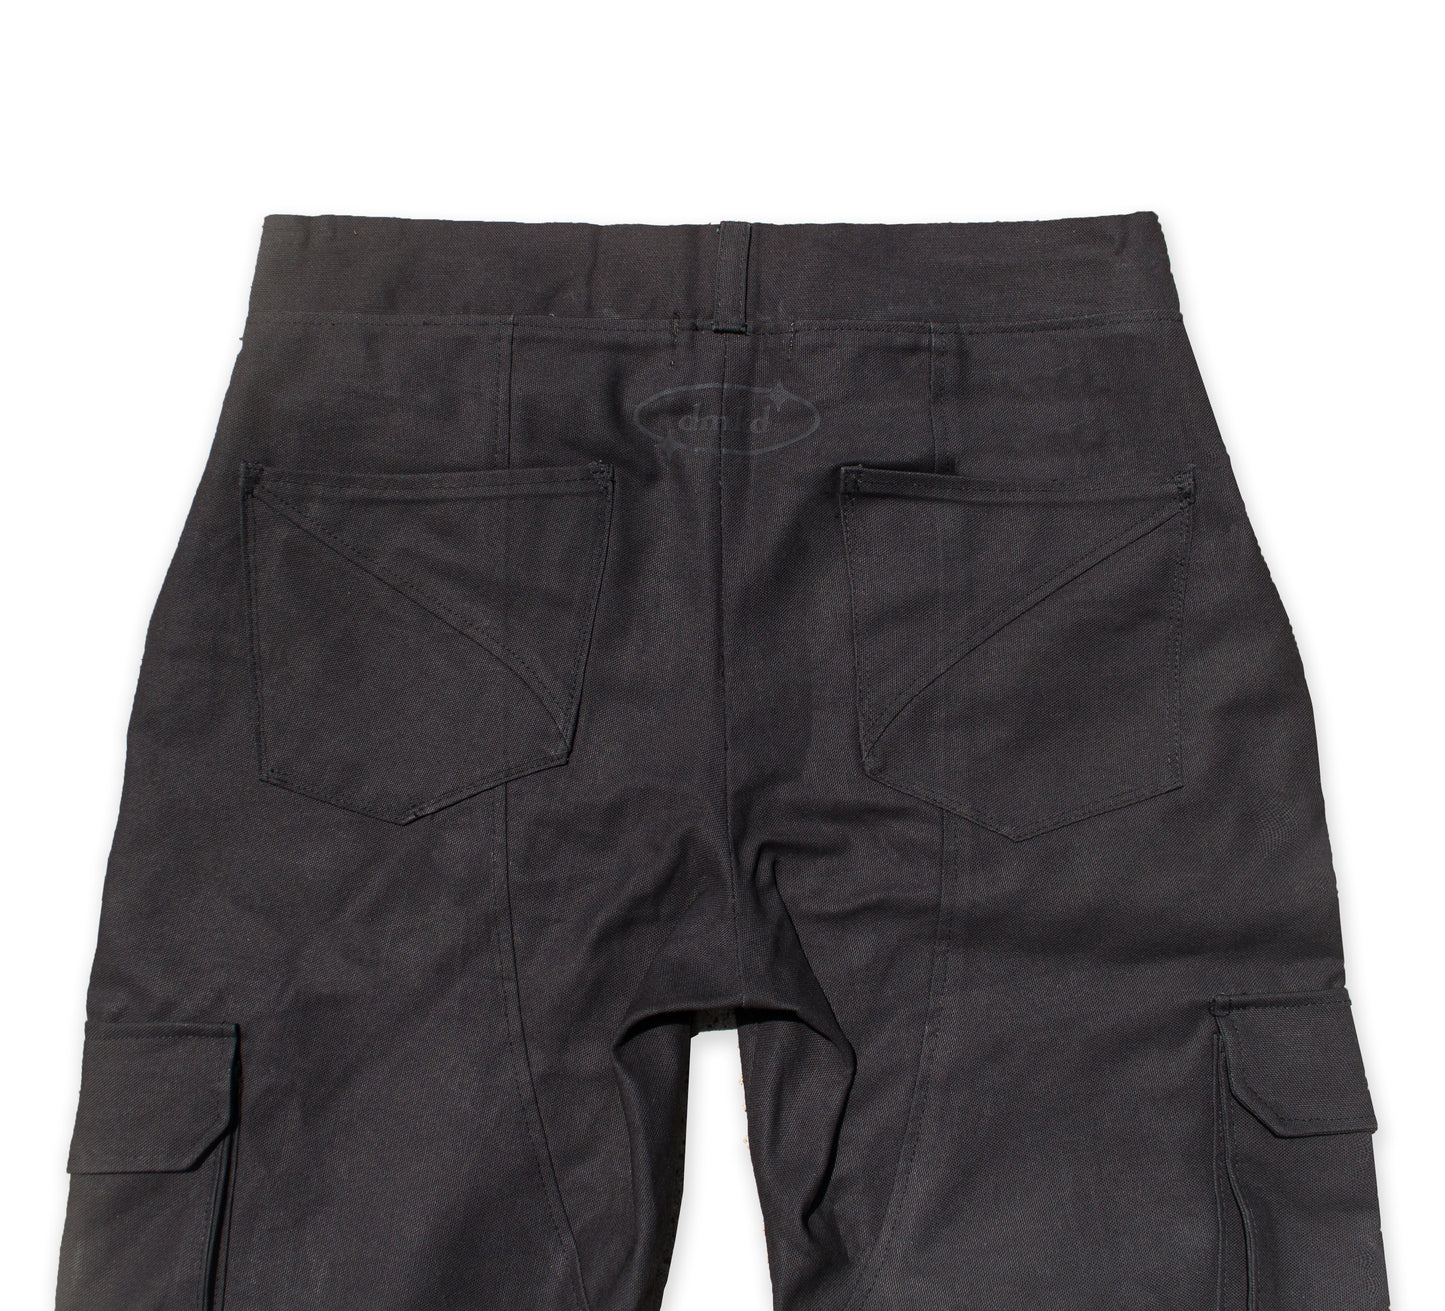 Toro 70 Pants - Black